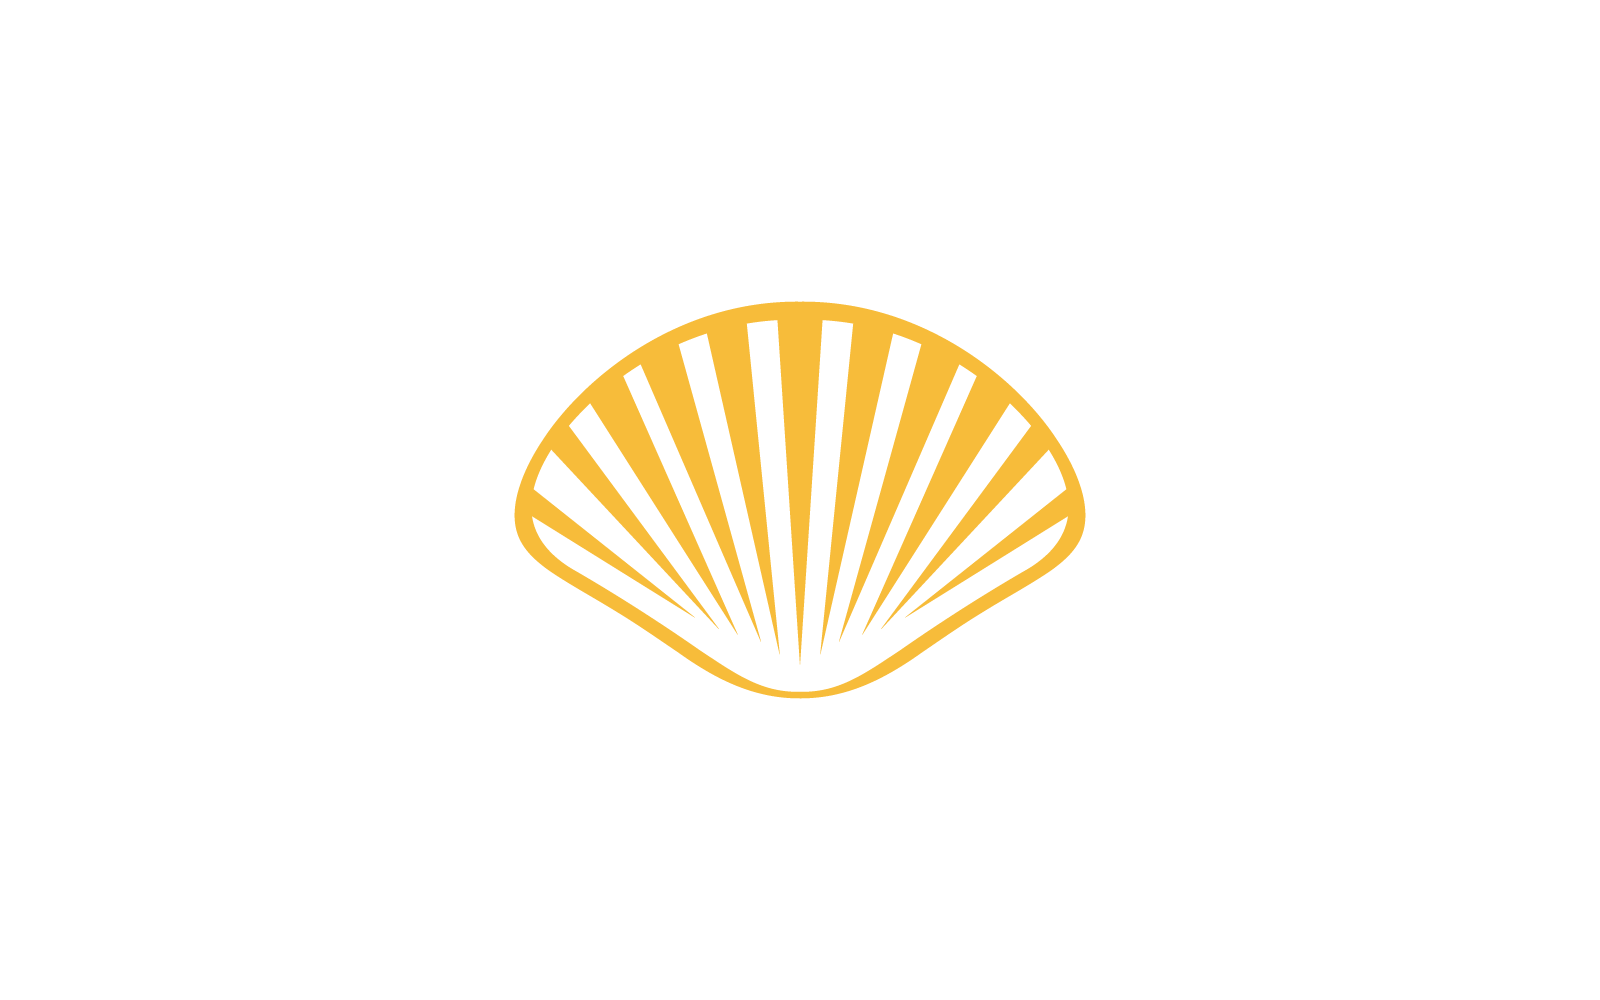 Shell illustration vector flat design template